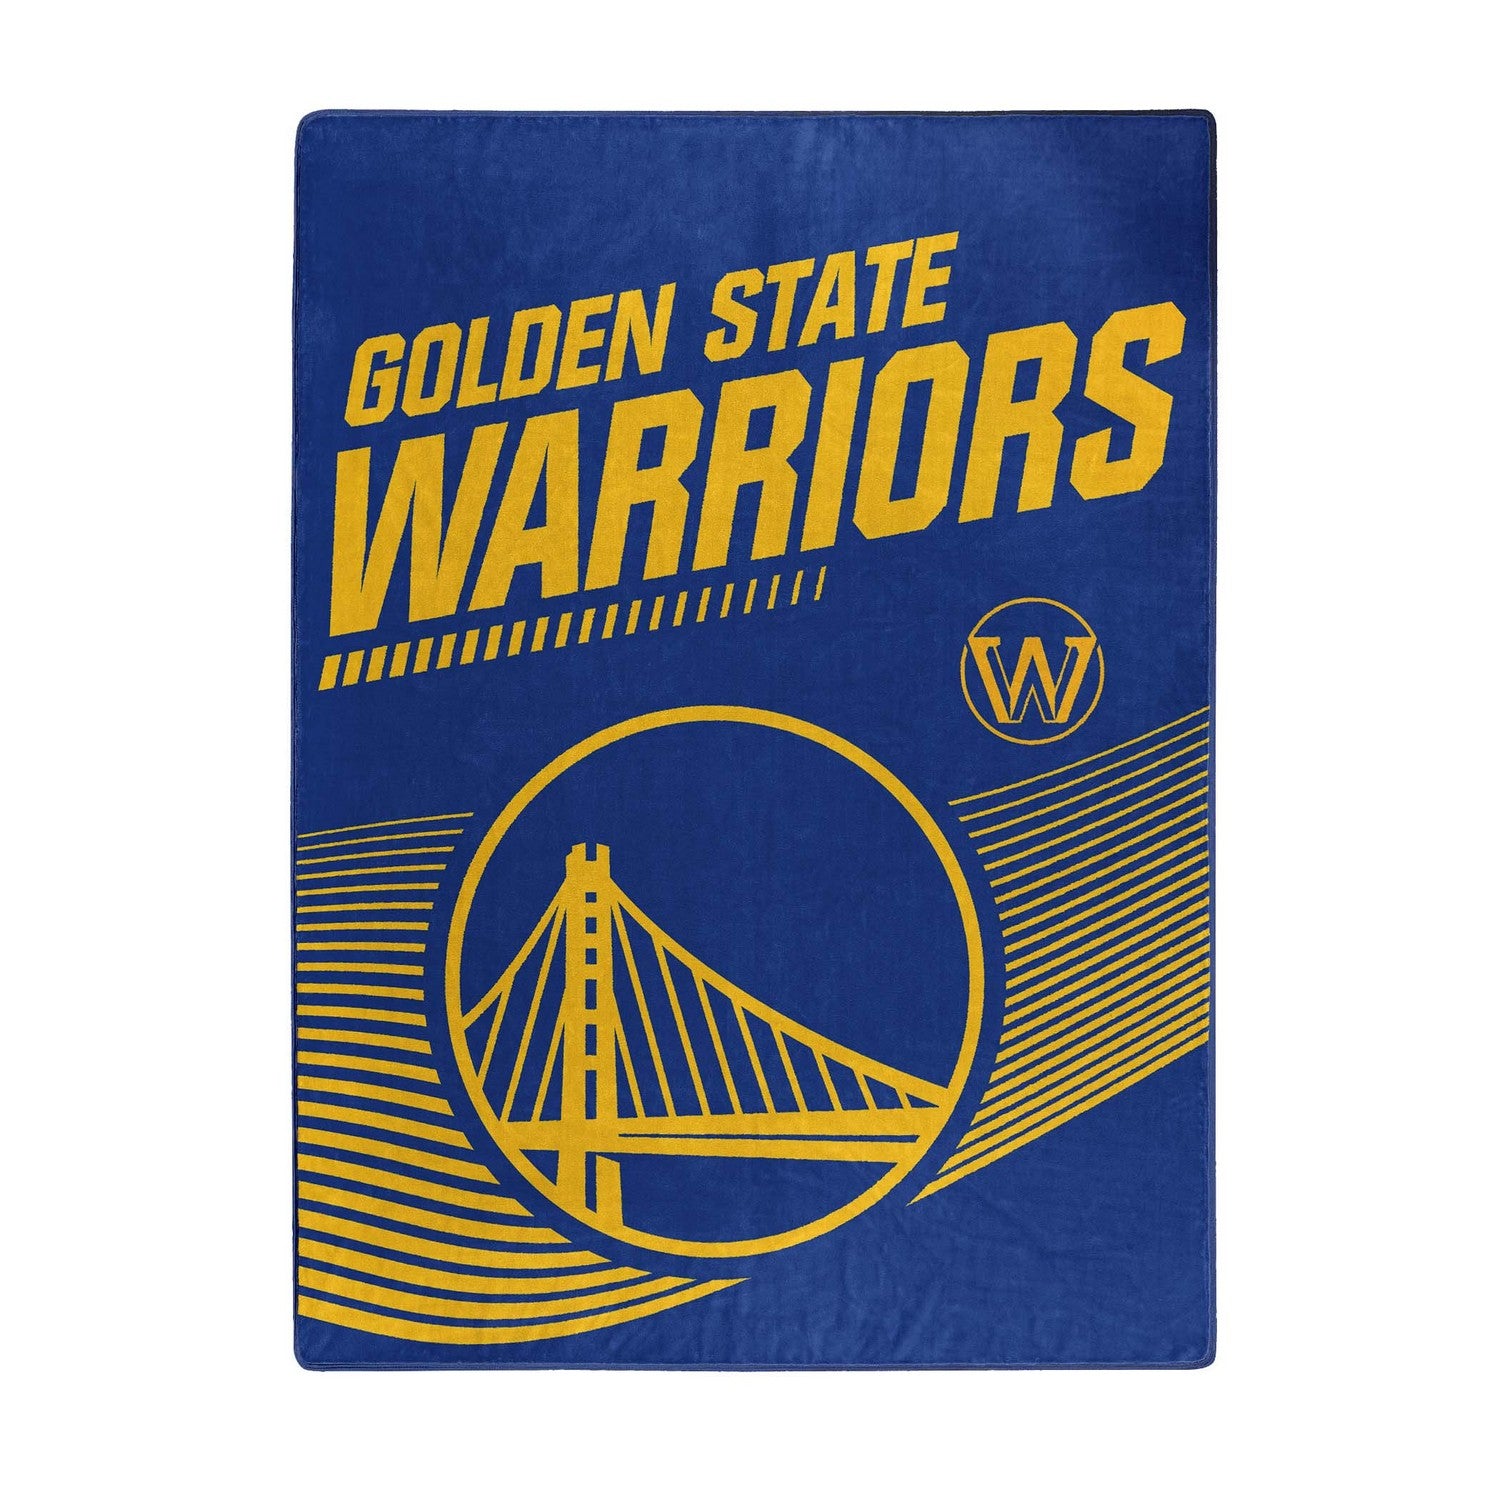 Golden State Warriors NBA Officially Licensed Raschel Throw Blanket 60x80